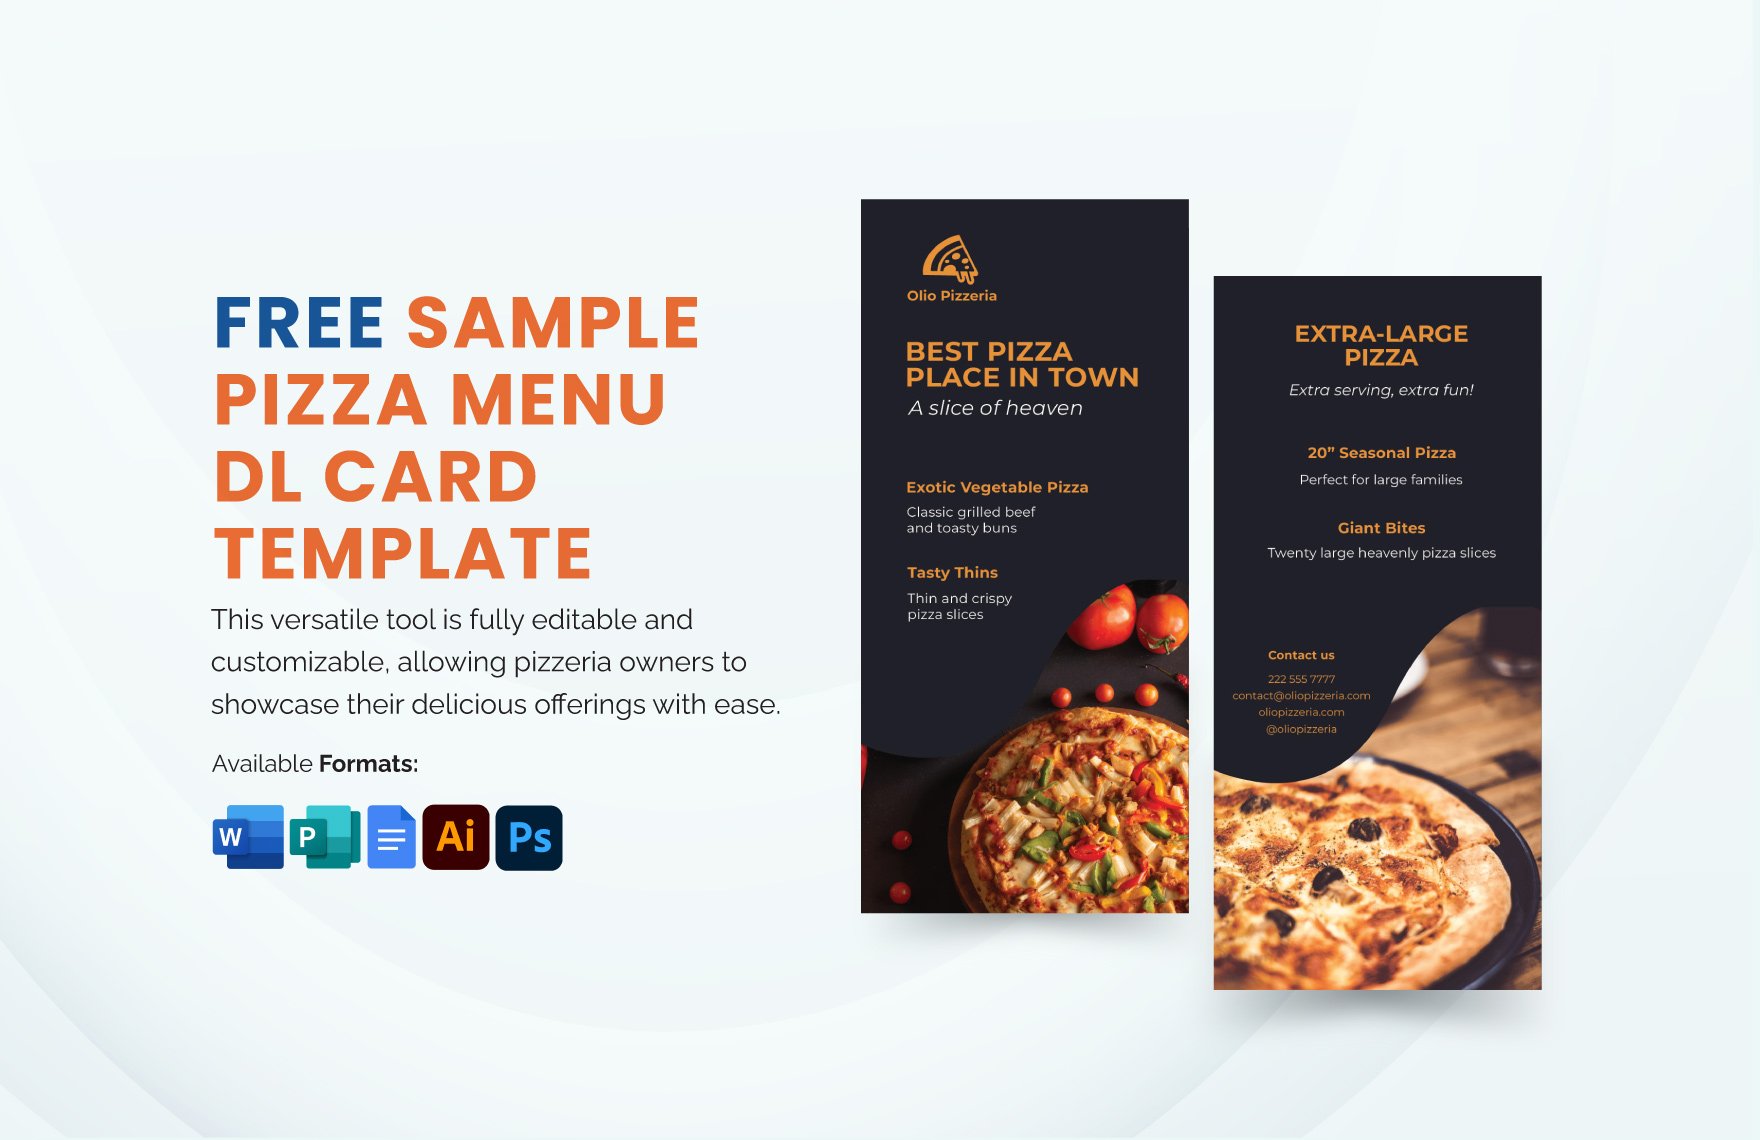 Free Sample Pizza Menu DL Card Template in Word, Google Docs, Illustrator, PSD, Publisher